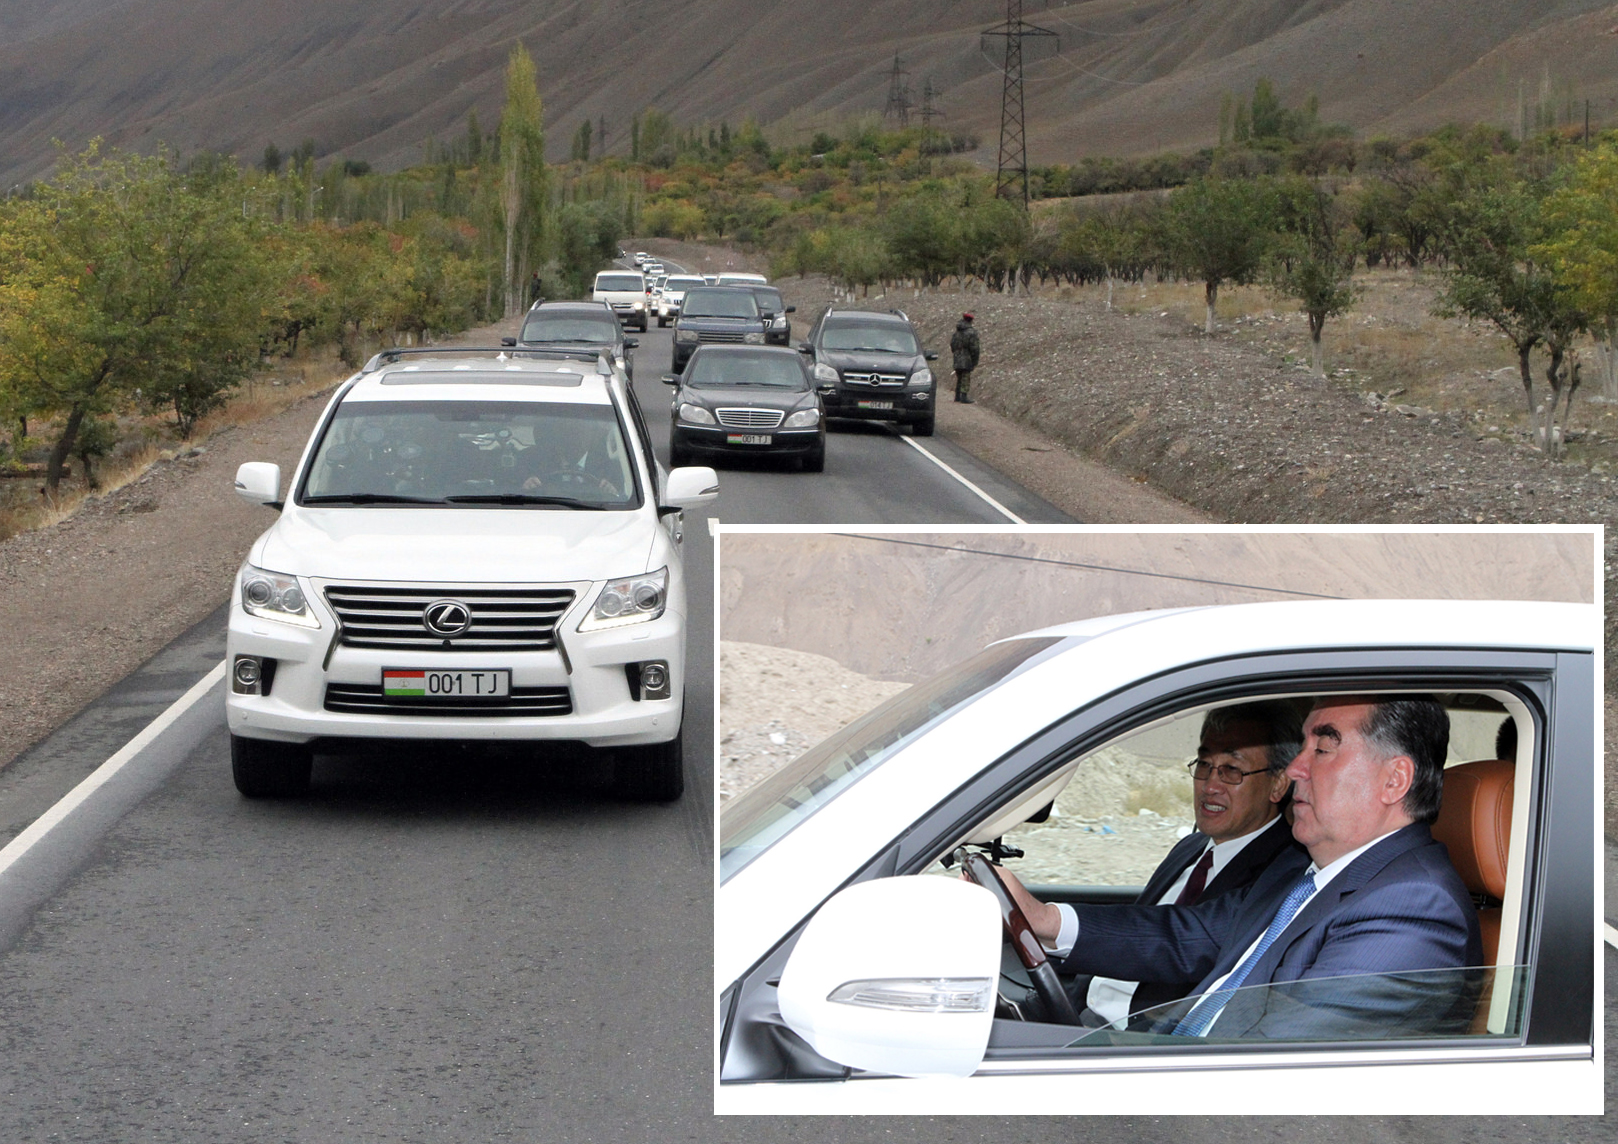 Таджик привез две машины. Кортеж президента Таджикистана. Кортеж Эмомали Рахмон в Душанбе. Номер машины президента Таджикистана.